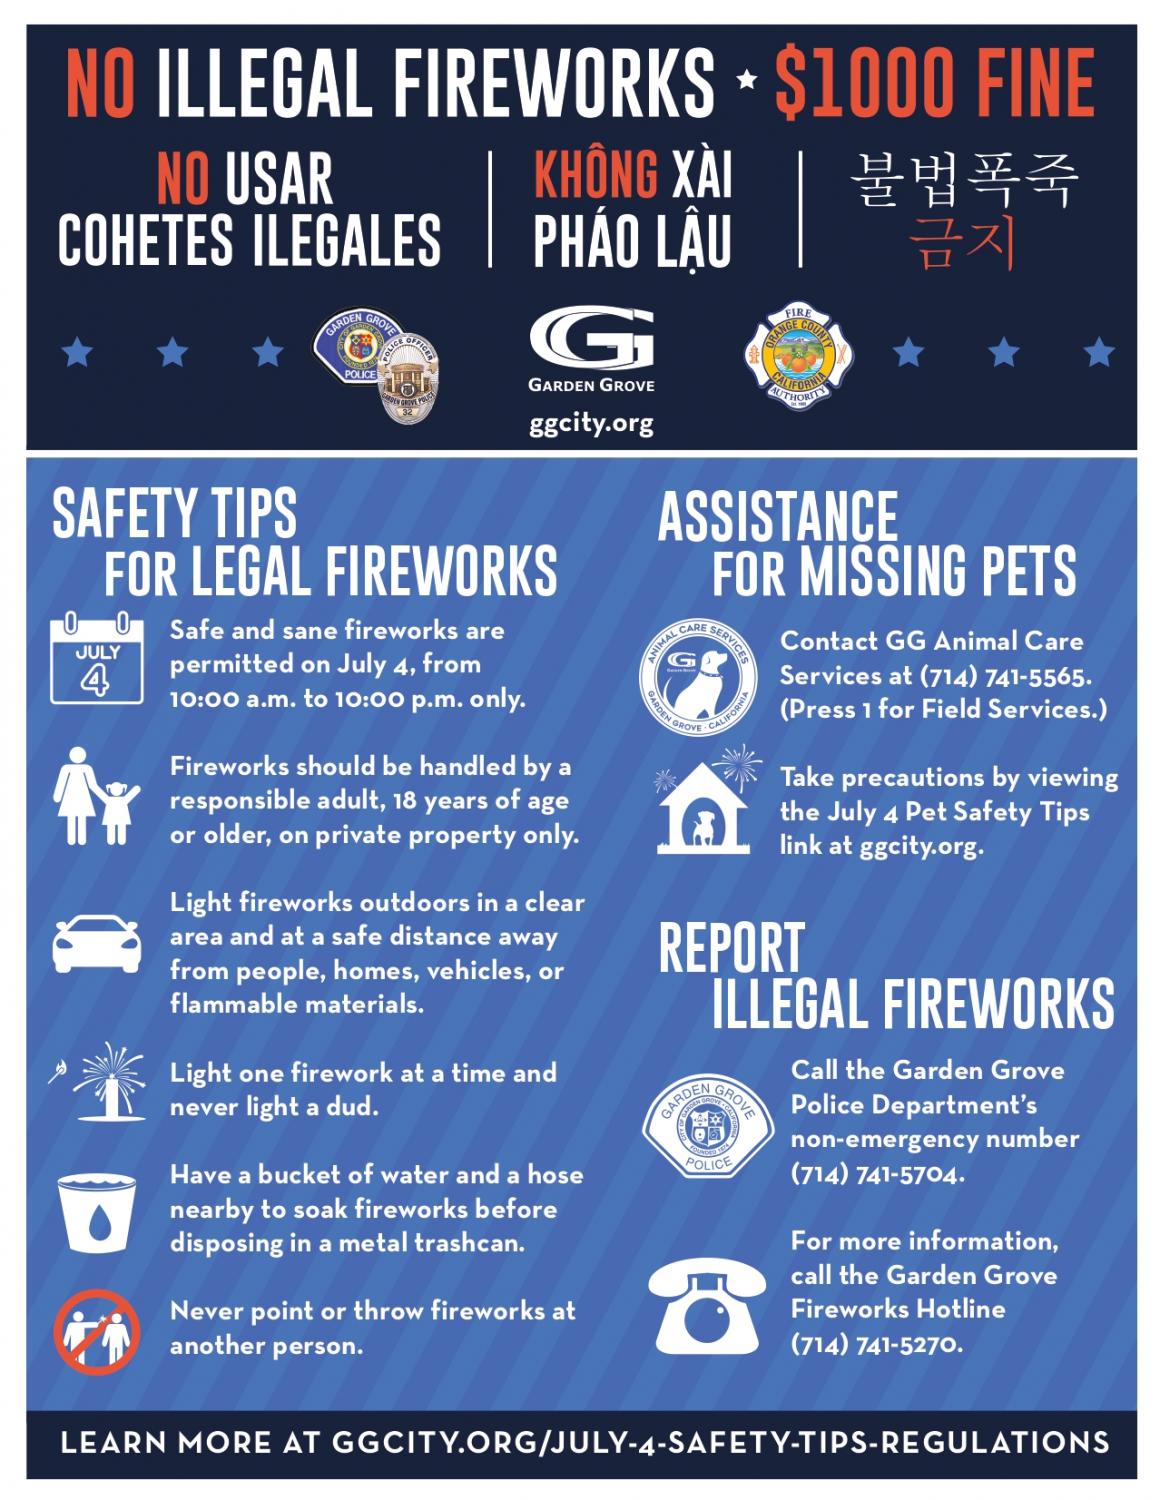 Fireworks Safety Tip Sheet - Hays County